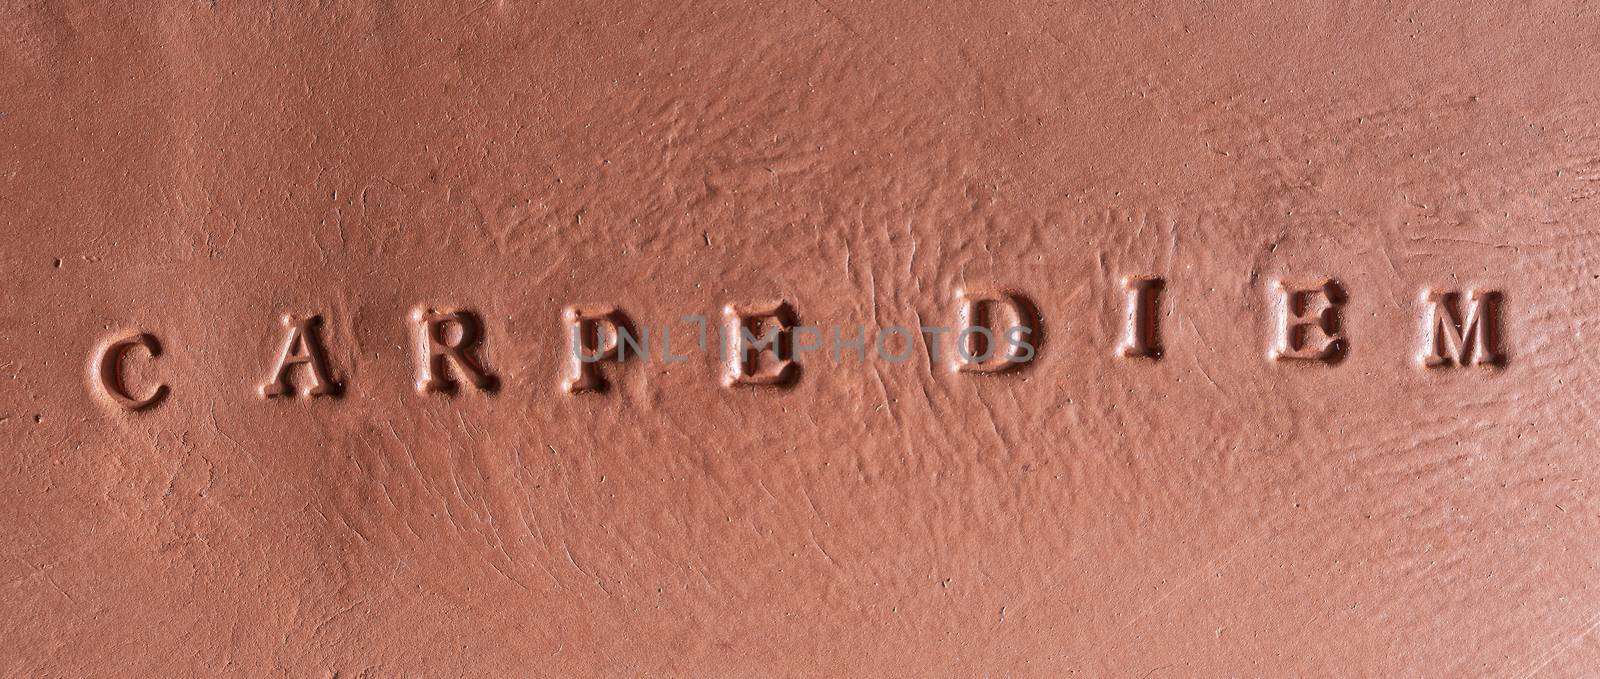  the phrase  “Carpe diem” written in Latin on a terracotta tablet